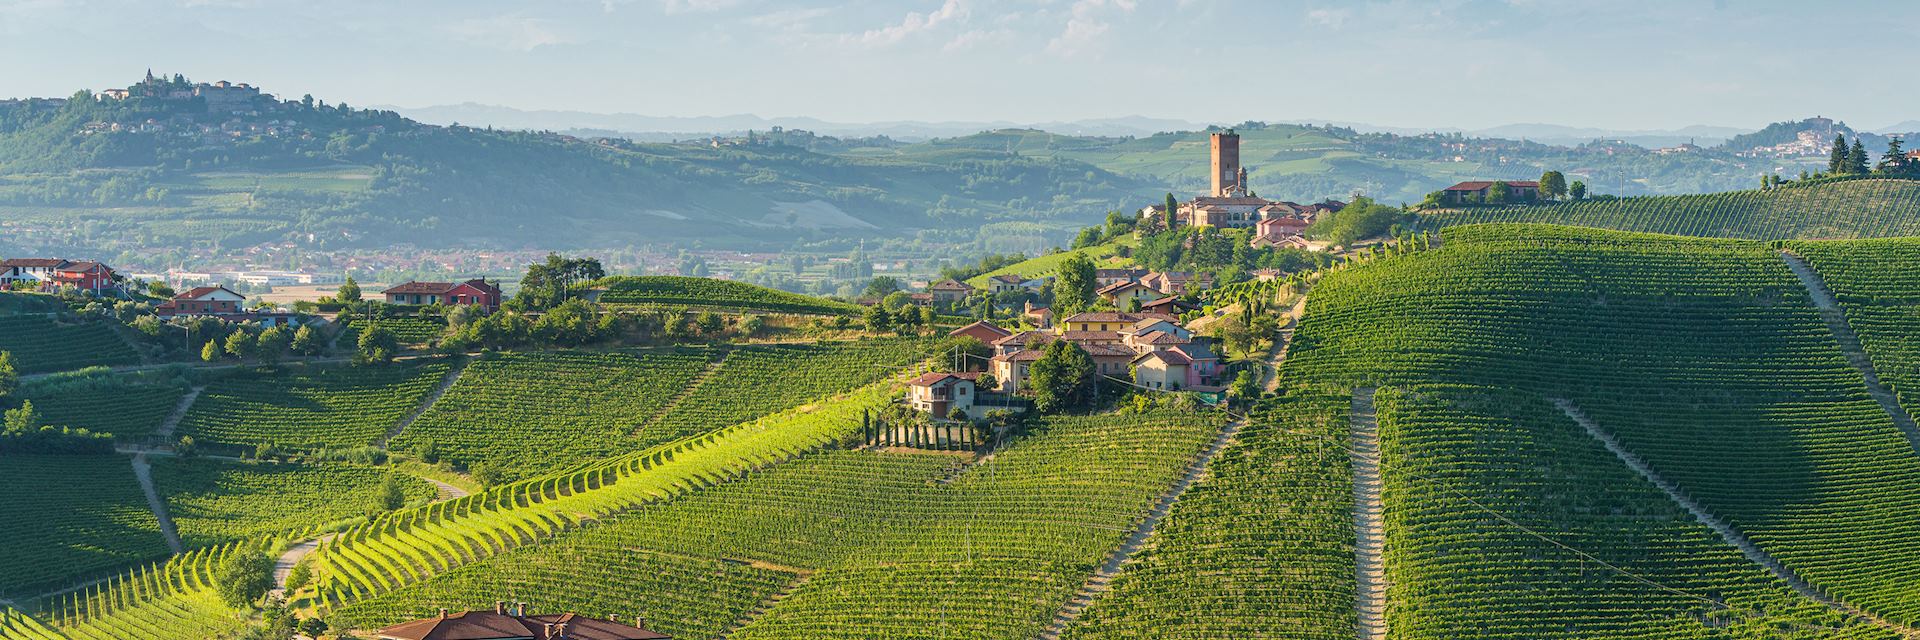 Vineyards in the Langhe region, Piedmont